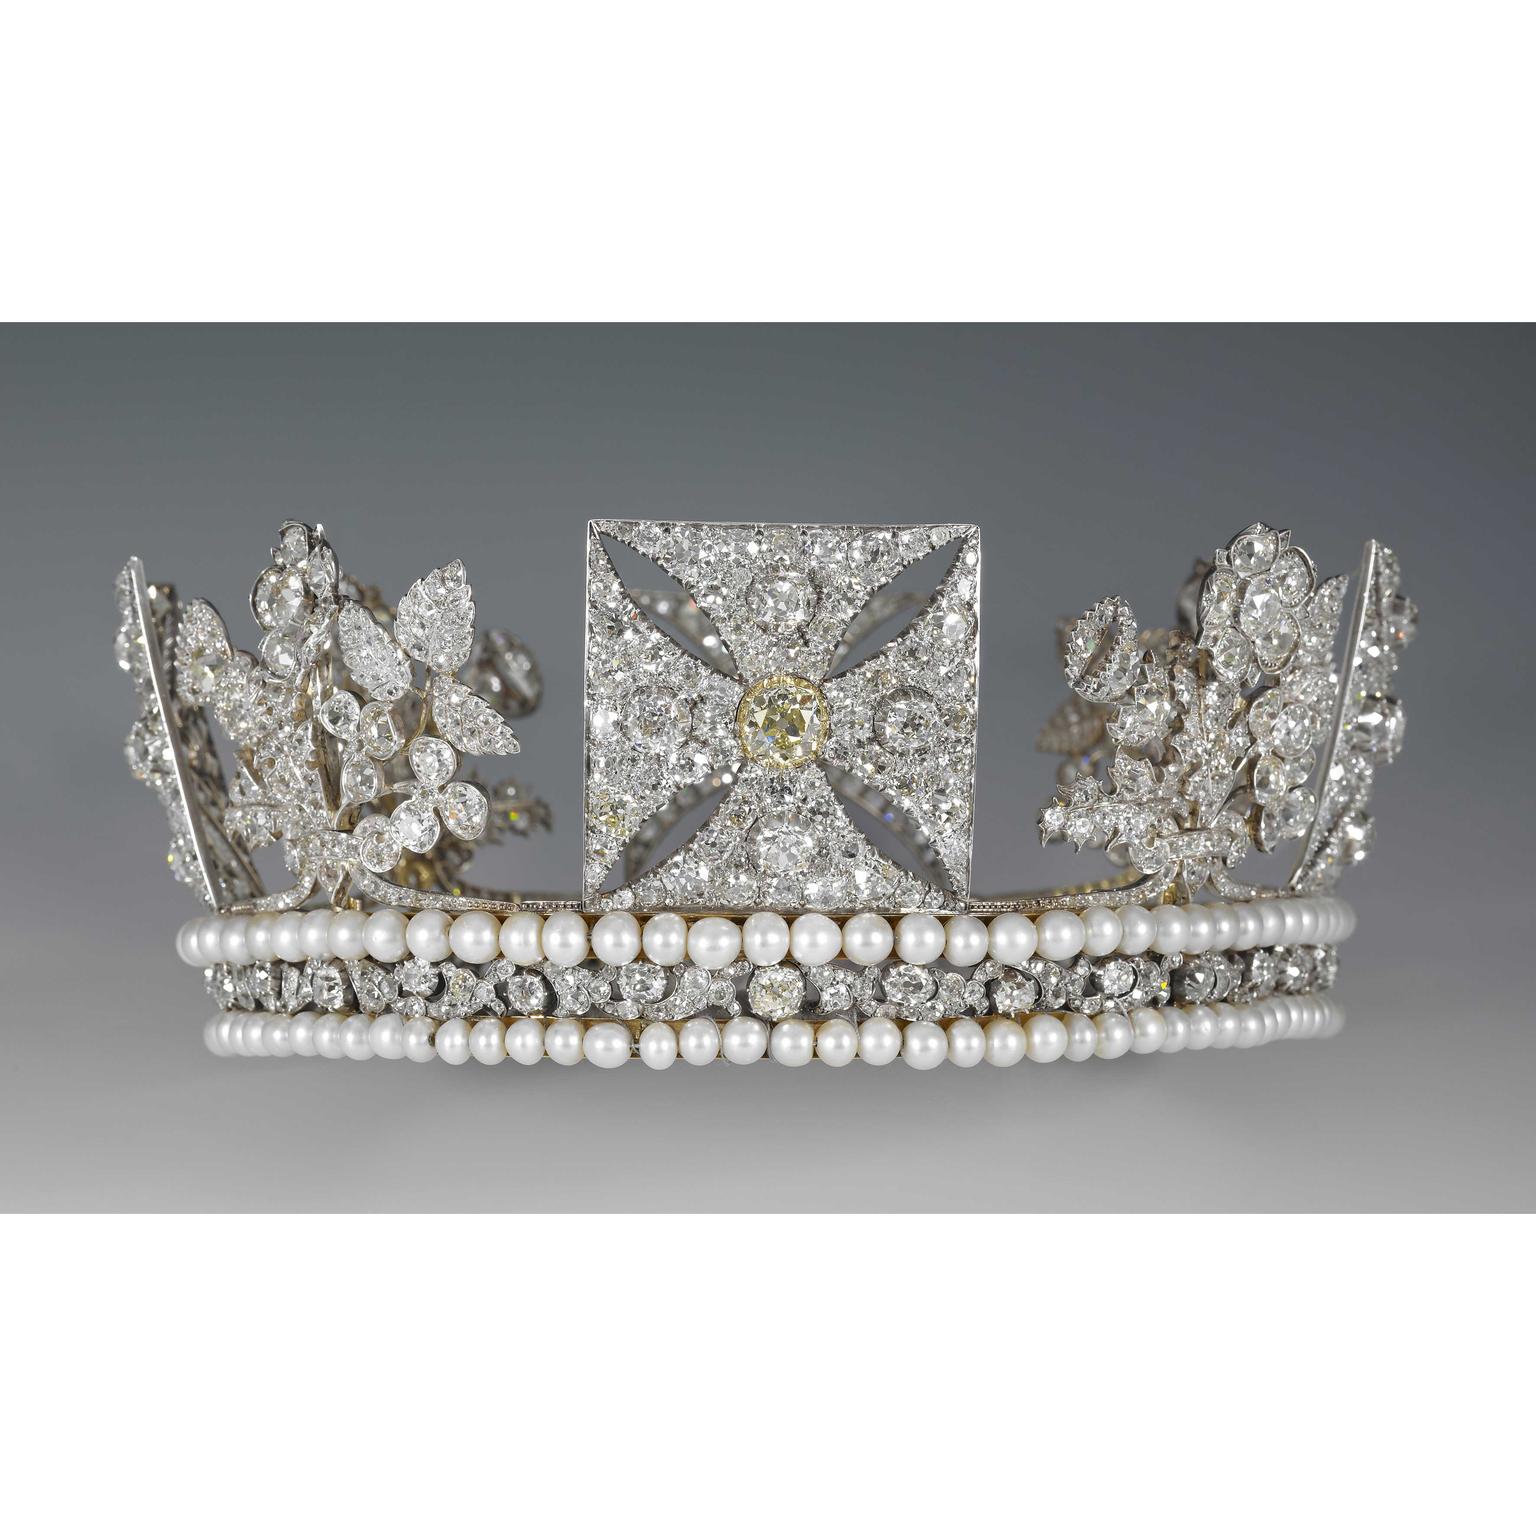 HM Queen Elizabeth II Diamond Diadem 1820